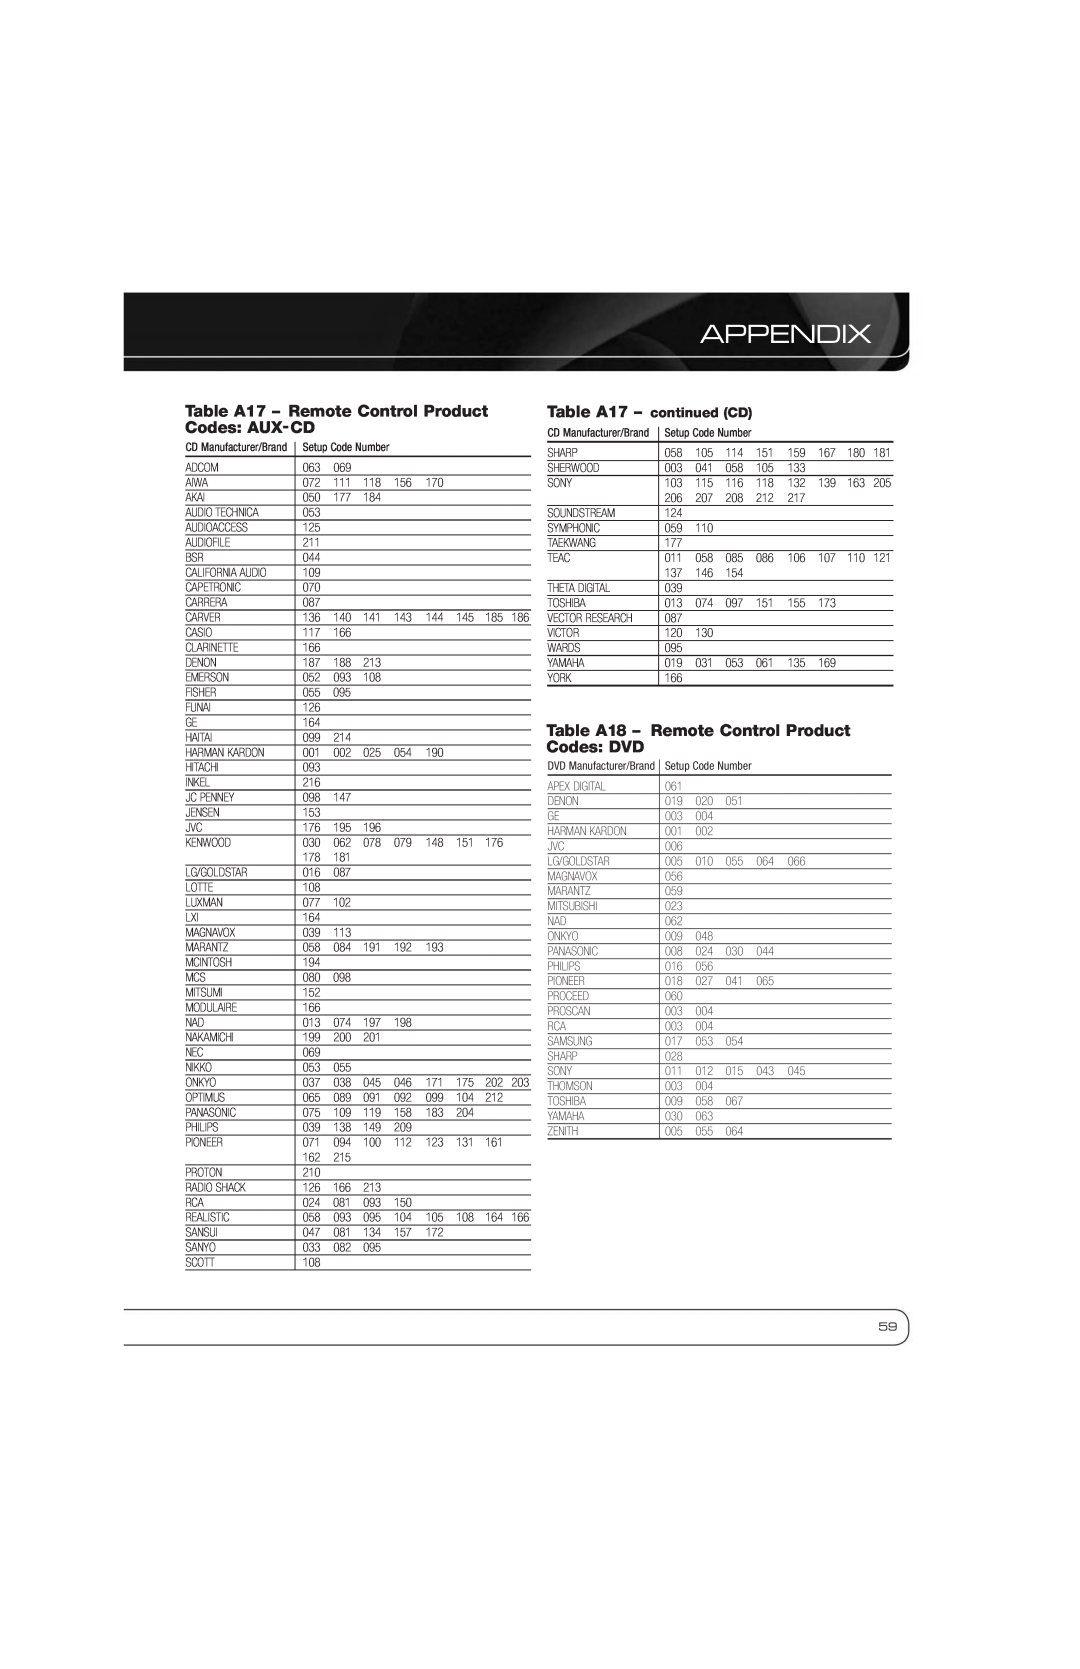 Harman AVR 2600 Table A17 - Remote Control Product Codes AUX-CD, Table A18 - Remote Control Product Codes DVD, Appendix 